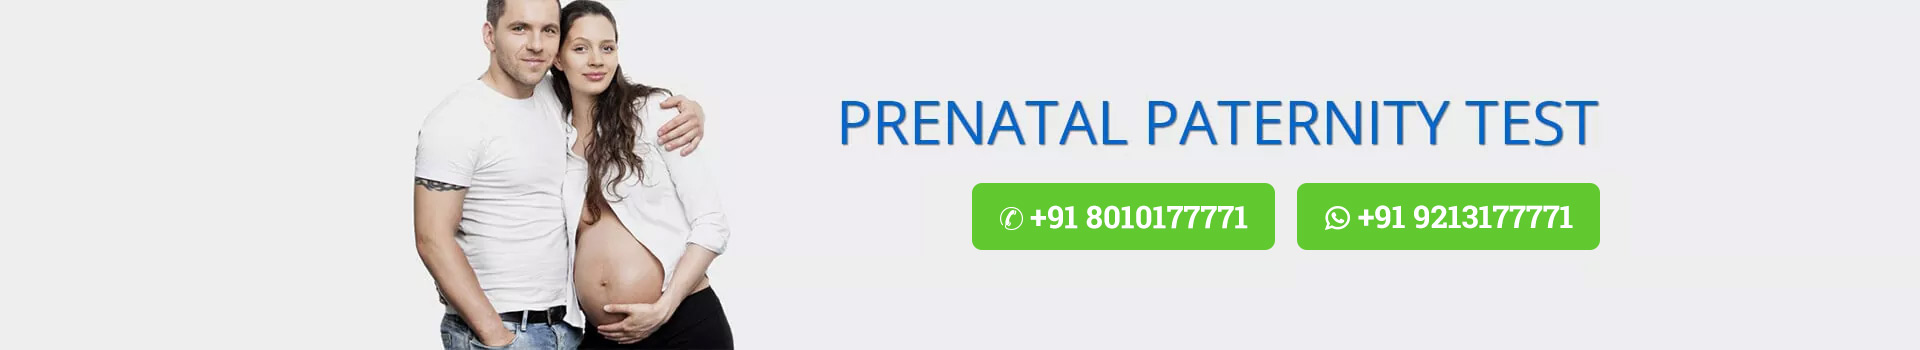 Prenatal Paternity Test | DNA Test While Pregnant